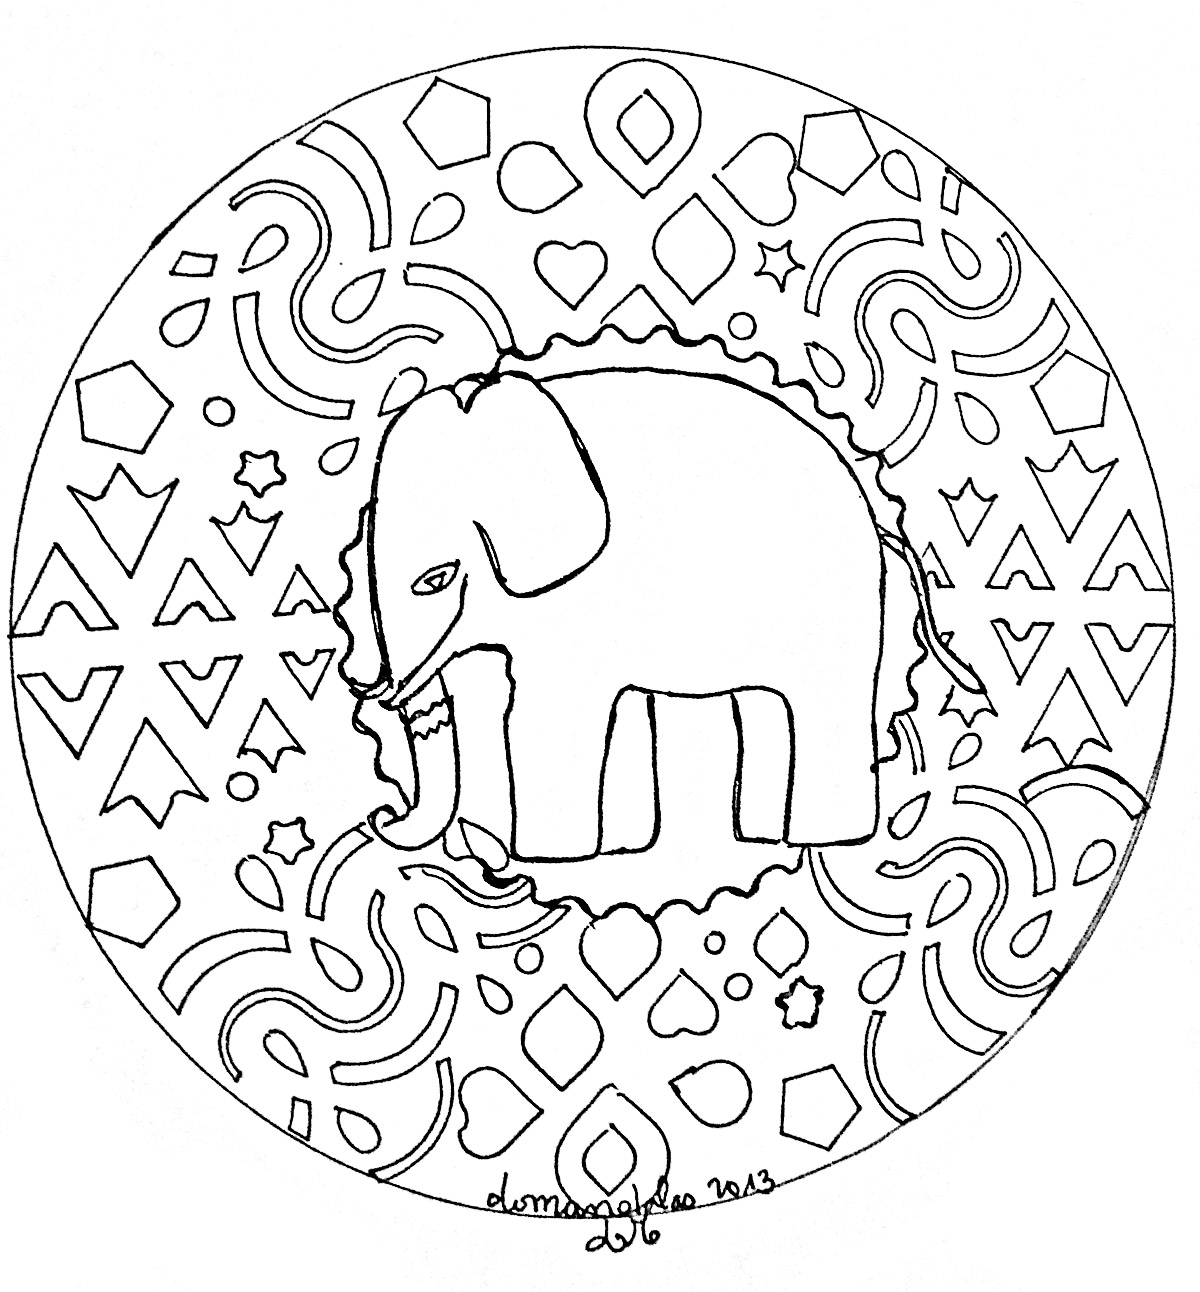 Mandala domandalas elephant, Artist : Domandalas